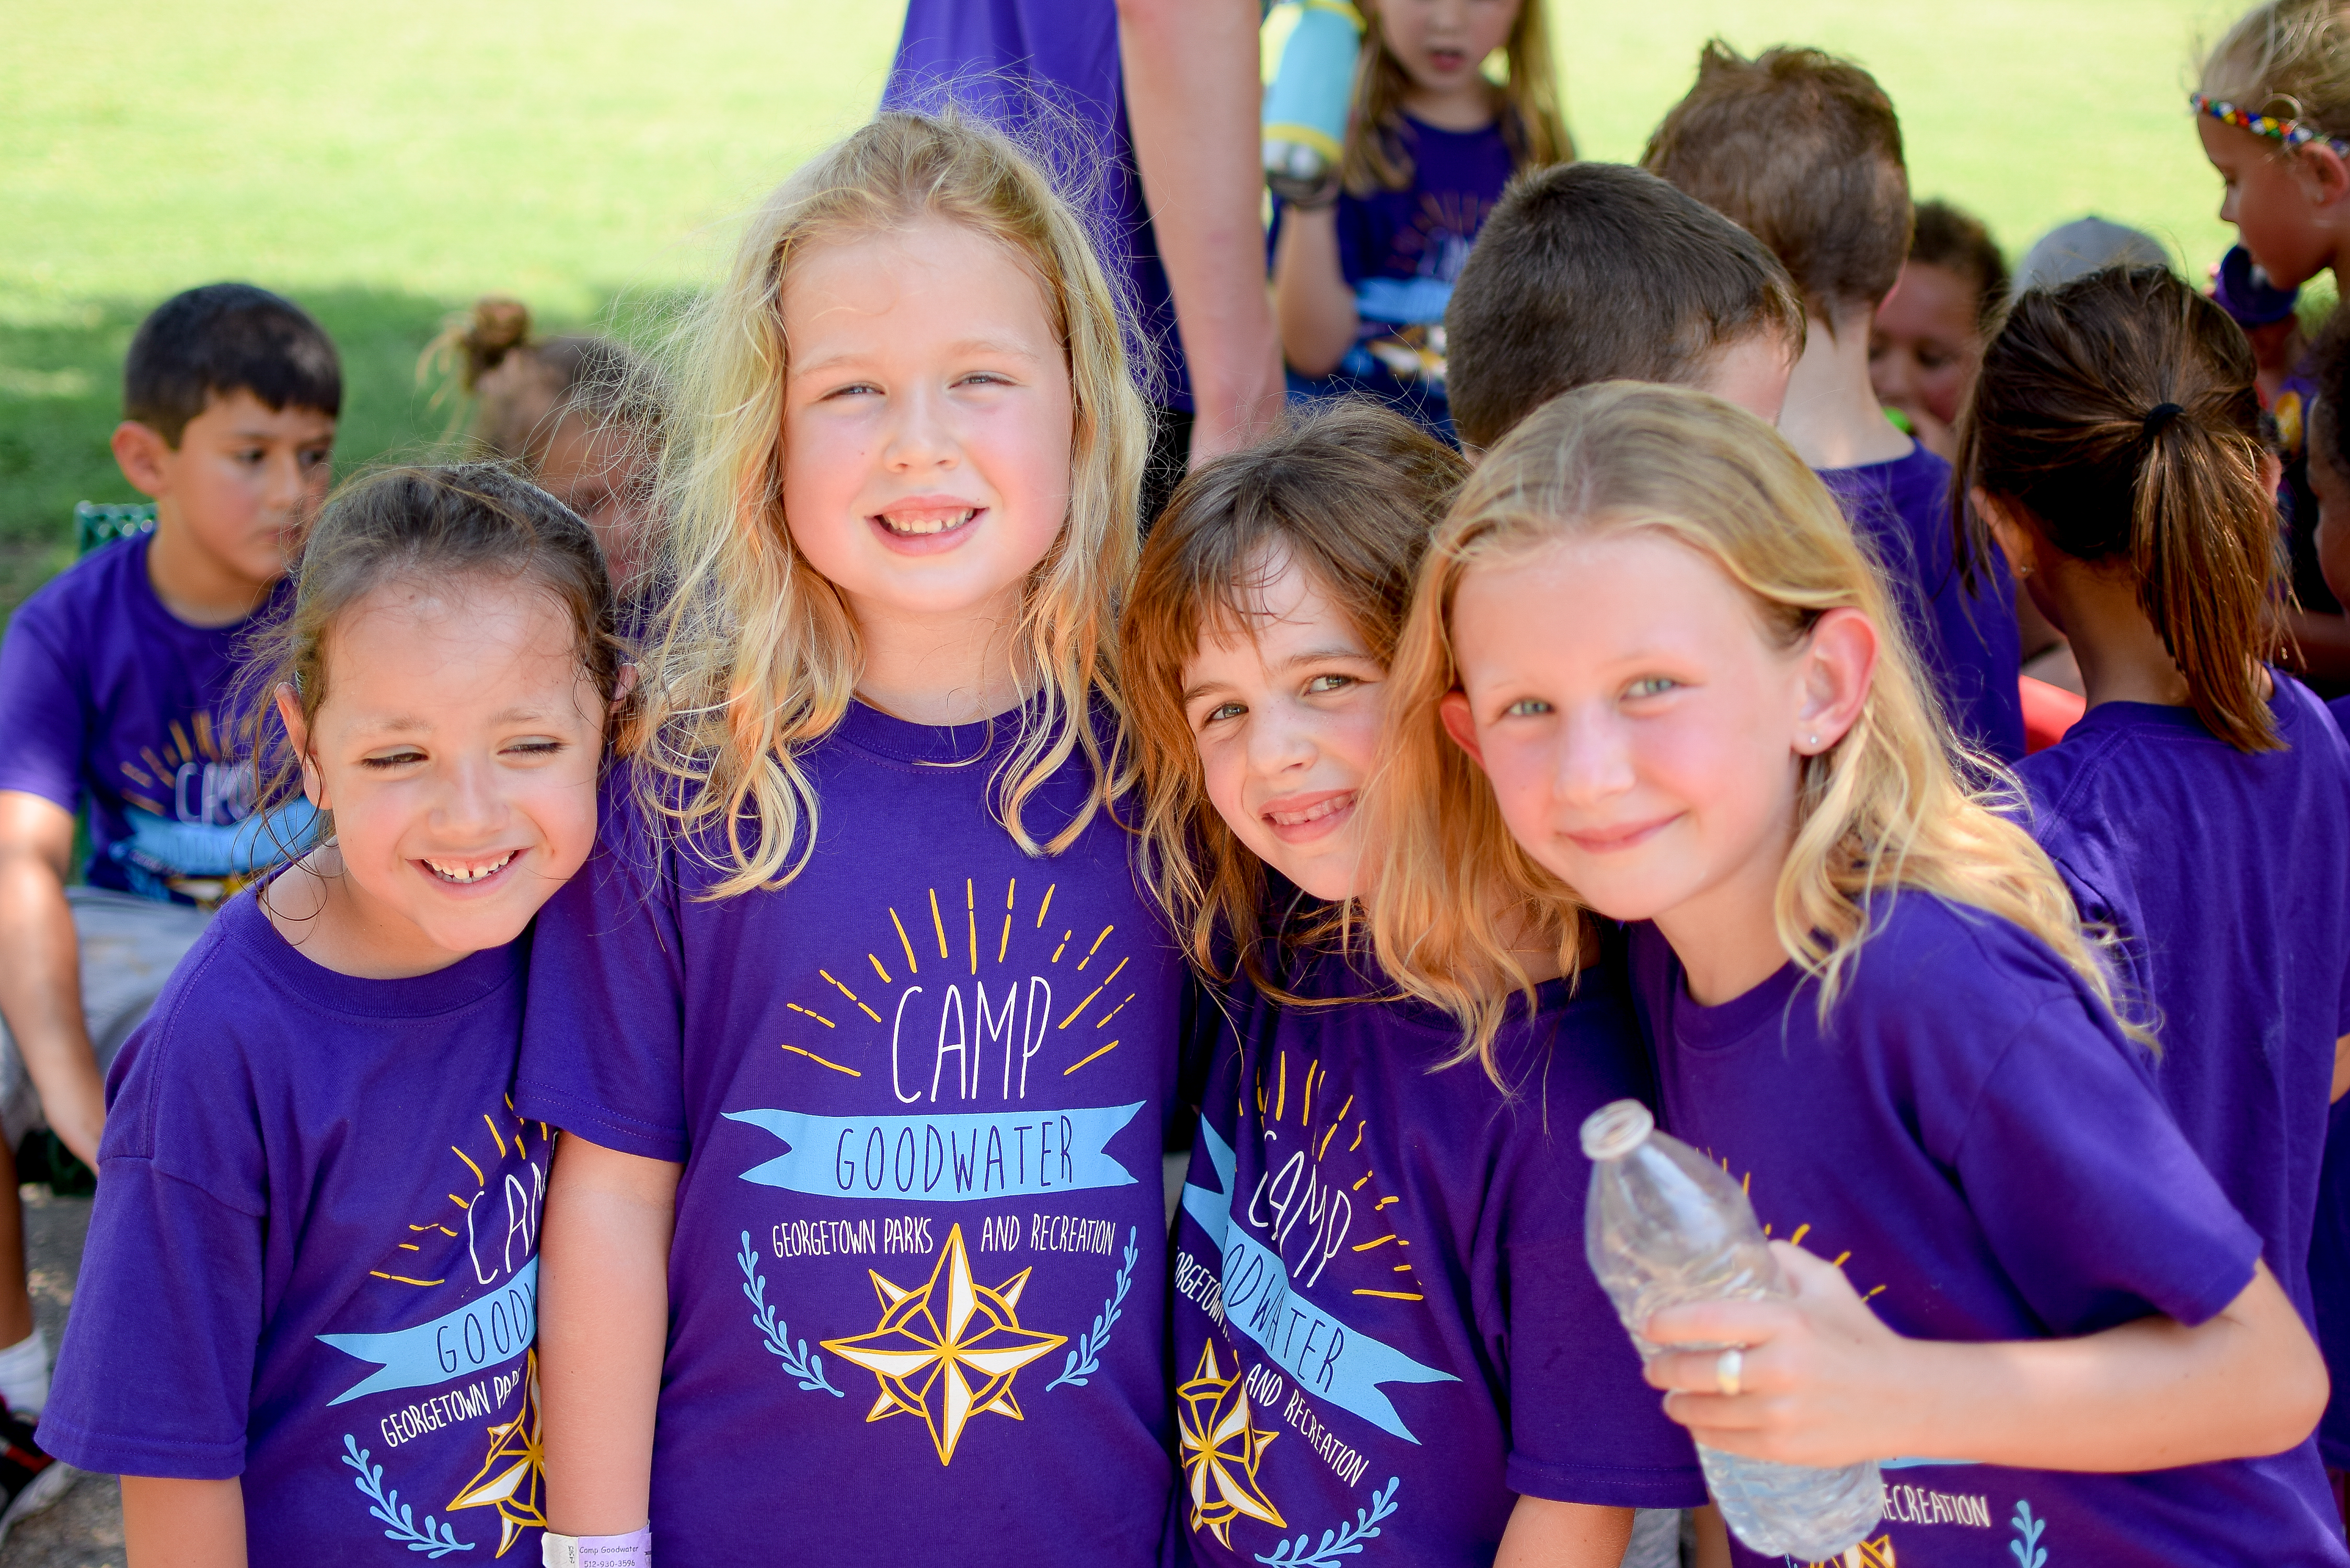 Four girls wearing purple Camp Goodwater shirts